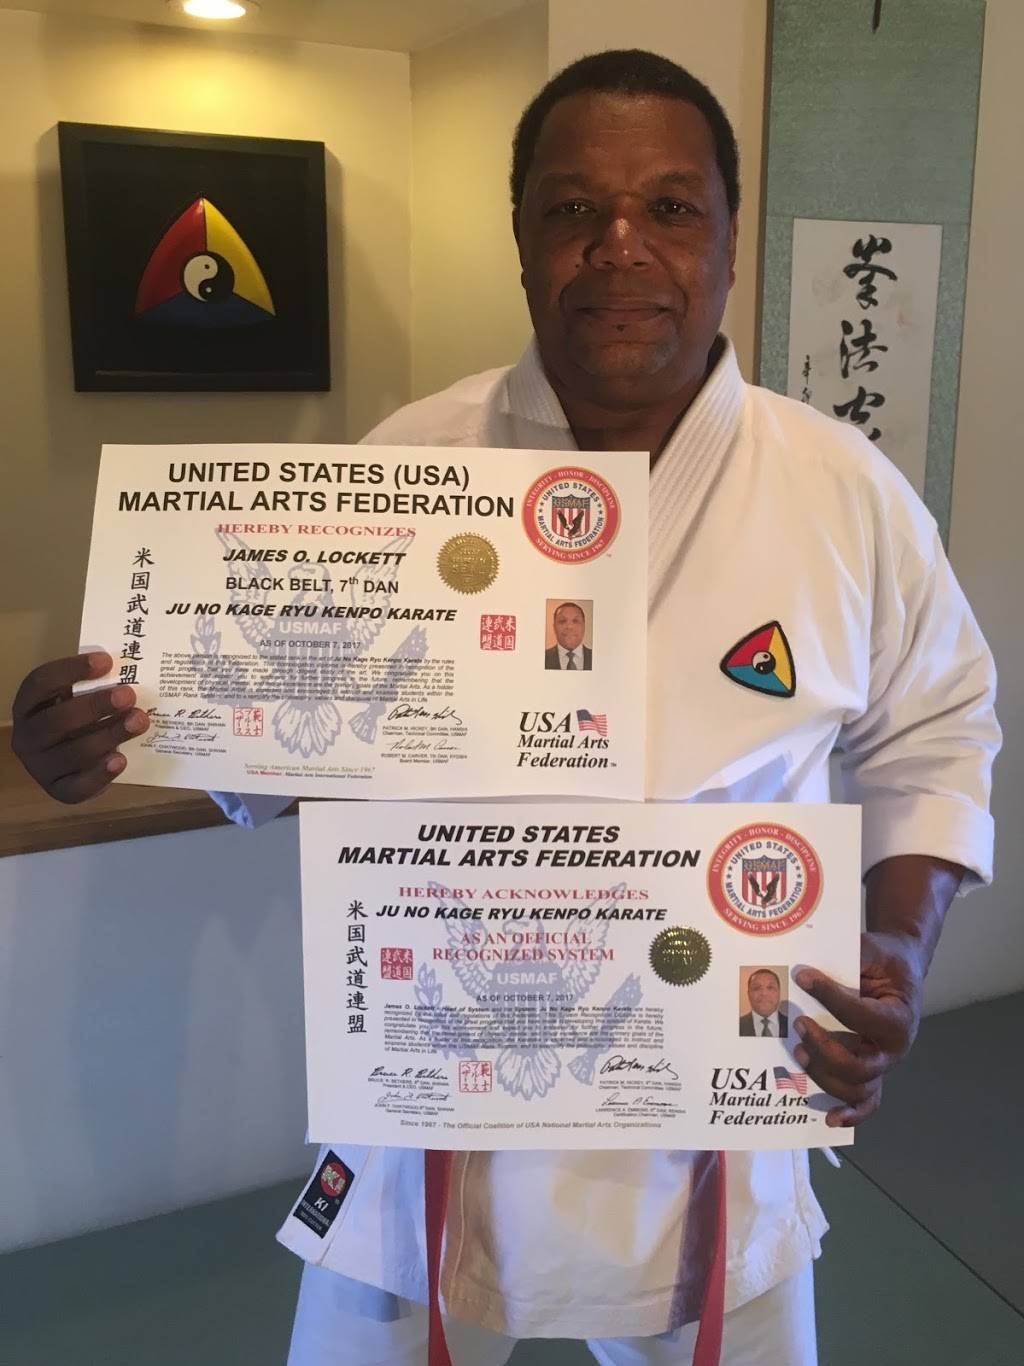 United States Martial Arts Federation (USMAF), 3816